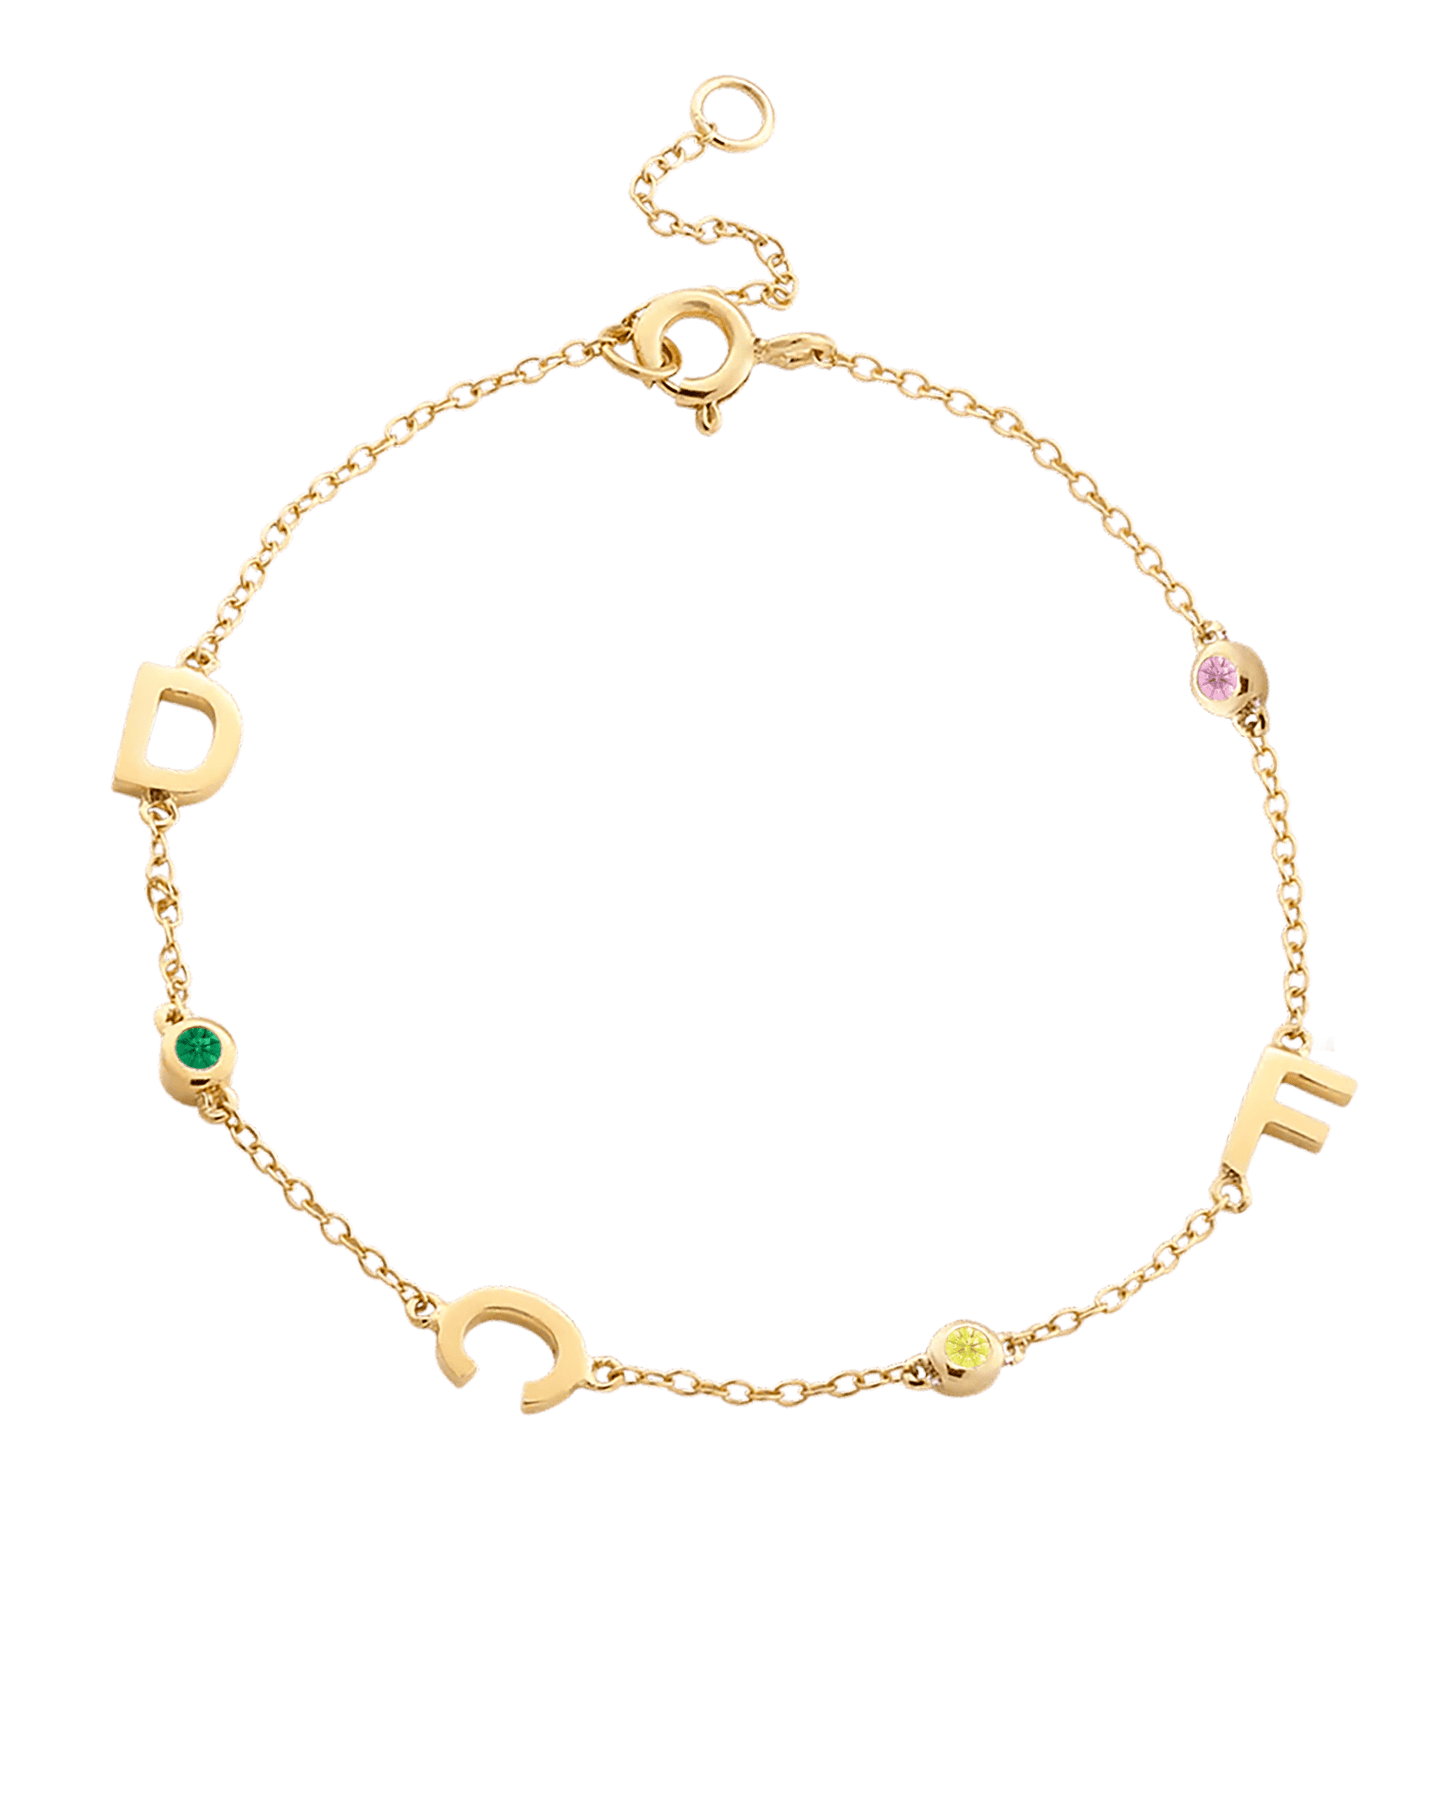 The Initial Birthstone Bracelet - 14K Yellow Gold Bracelets magal-dev 1 Initial 6"-7" (S-M wrist) 